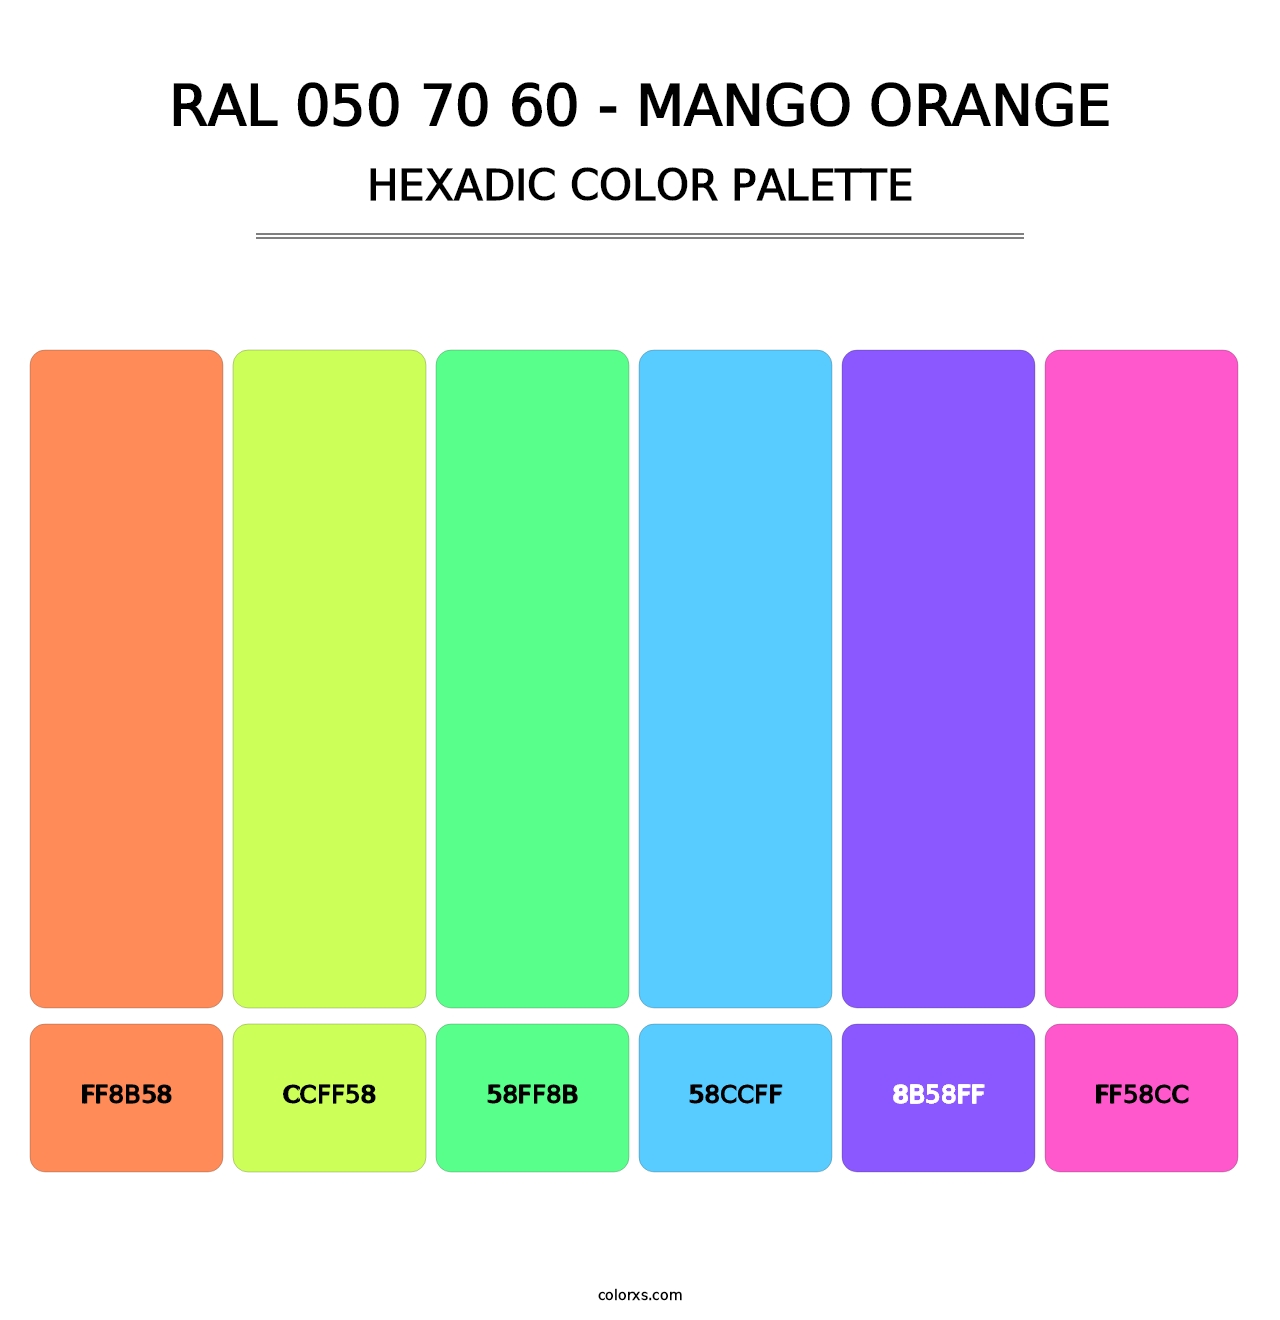 RAL 050 70 60 - Mango Orange - Hexadic Color Palette